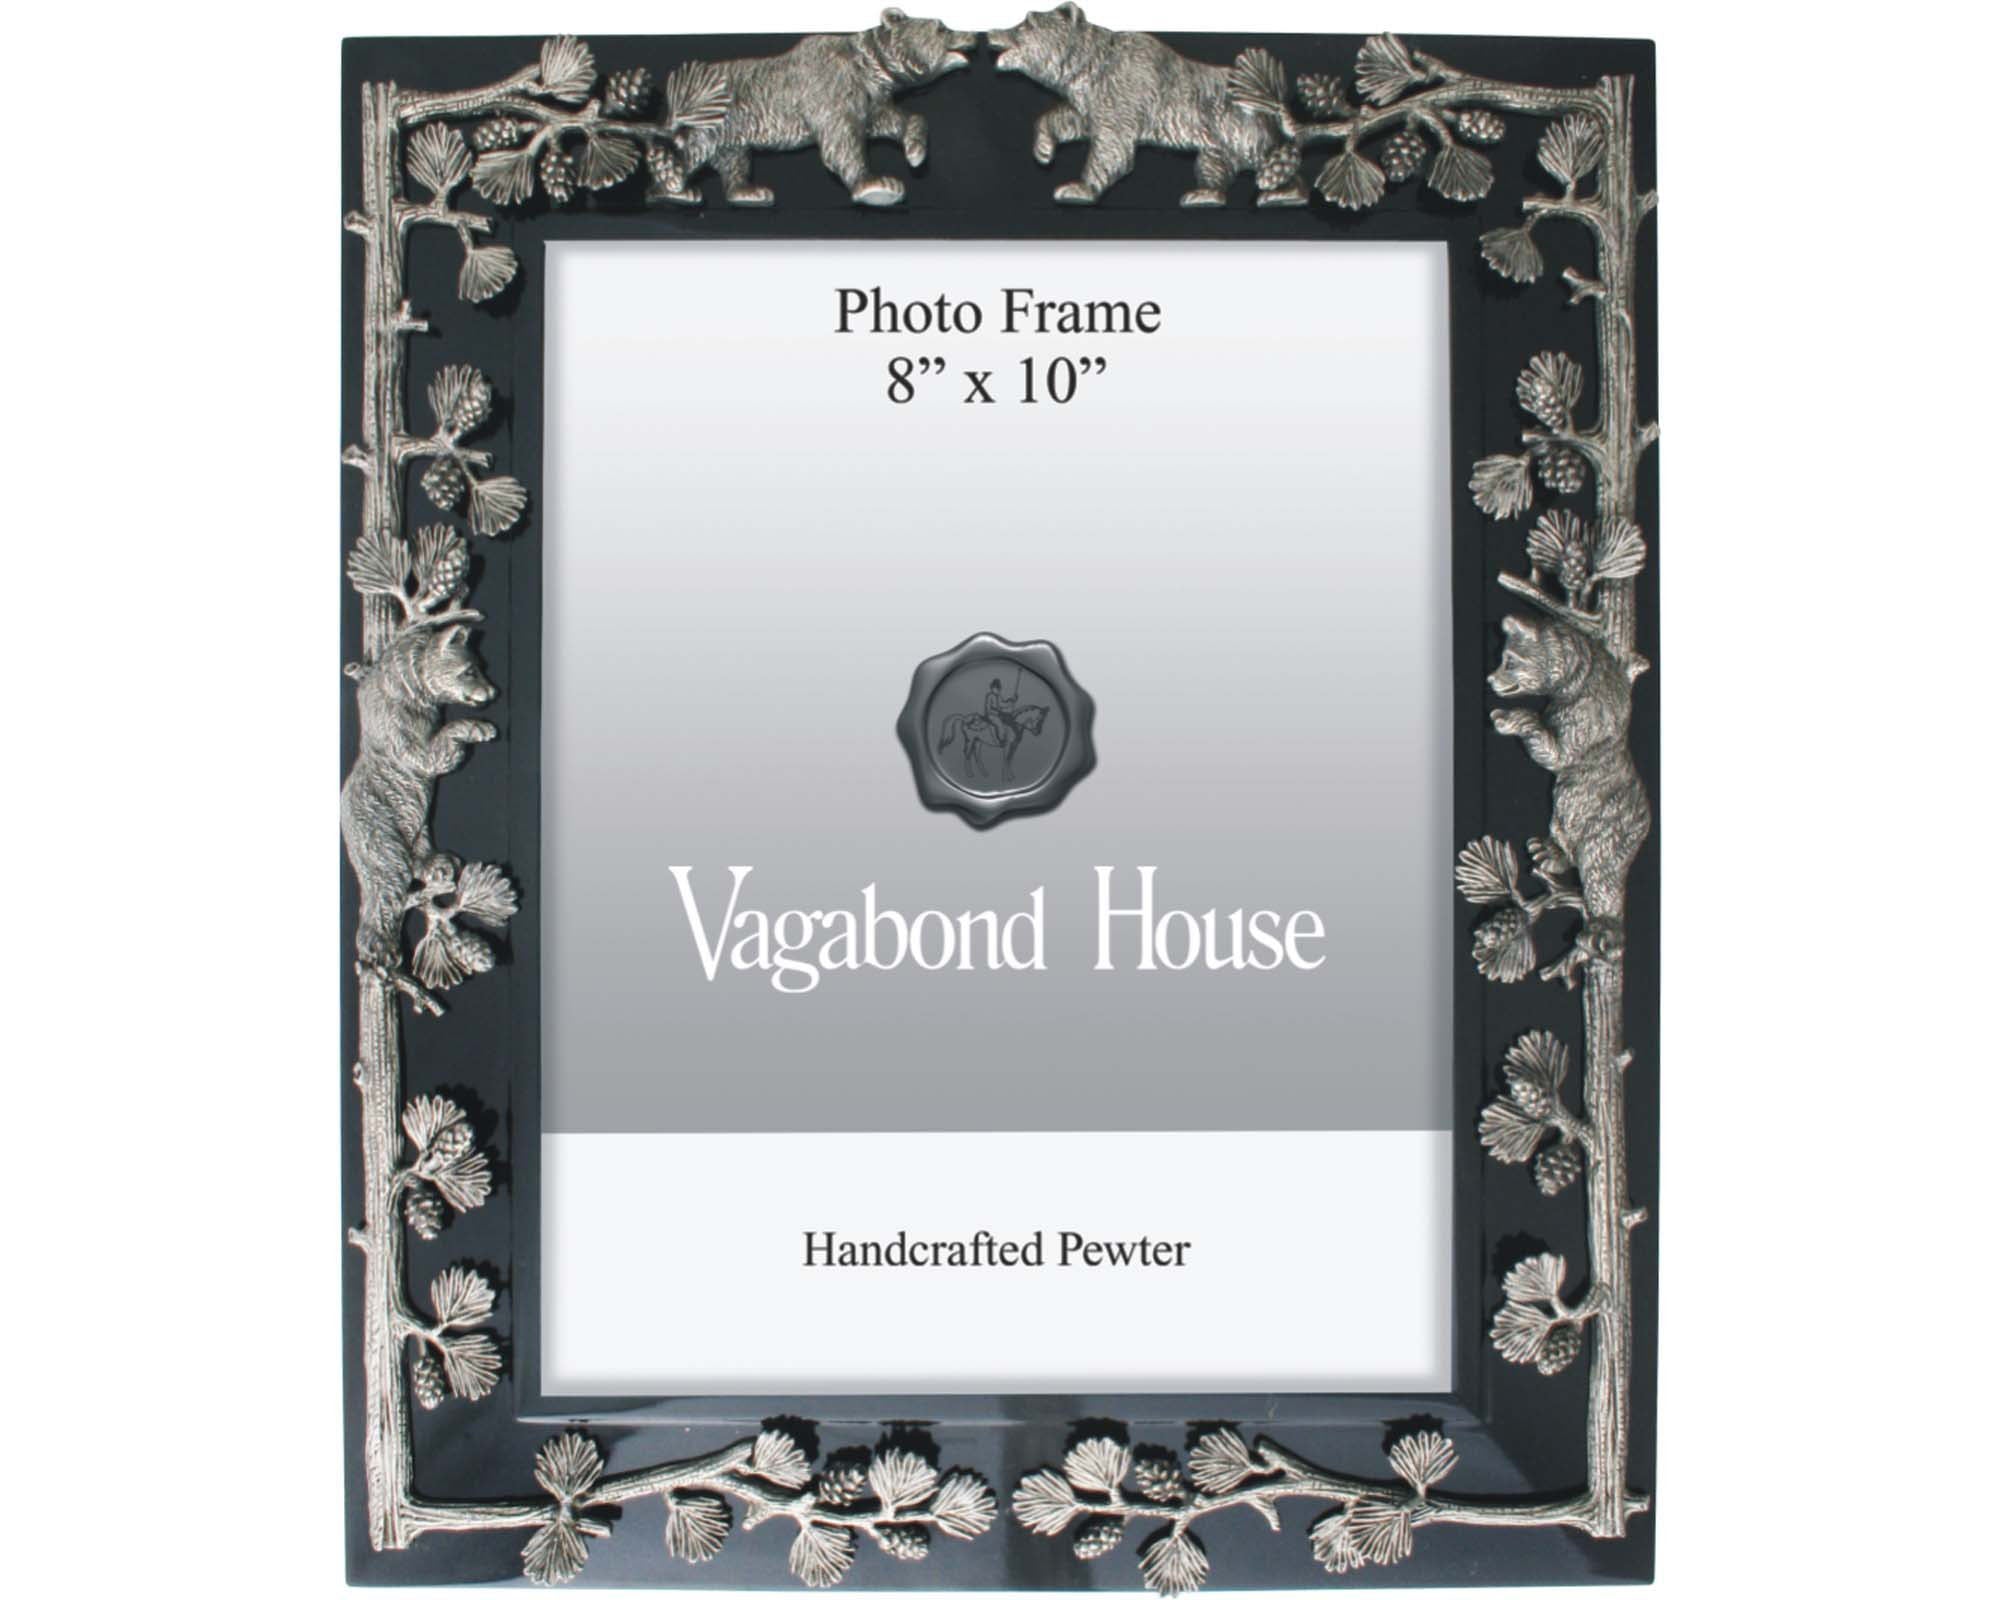 Picture Frames - Black Forest 5x7  Vagabond House